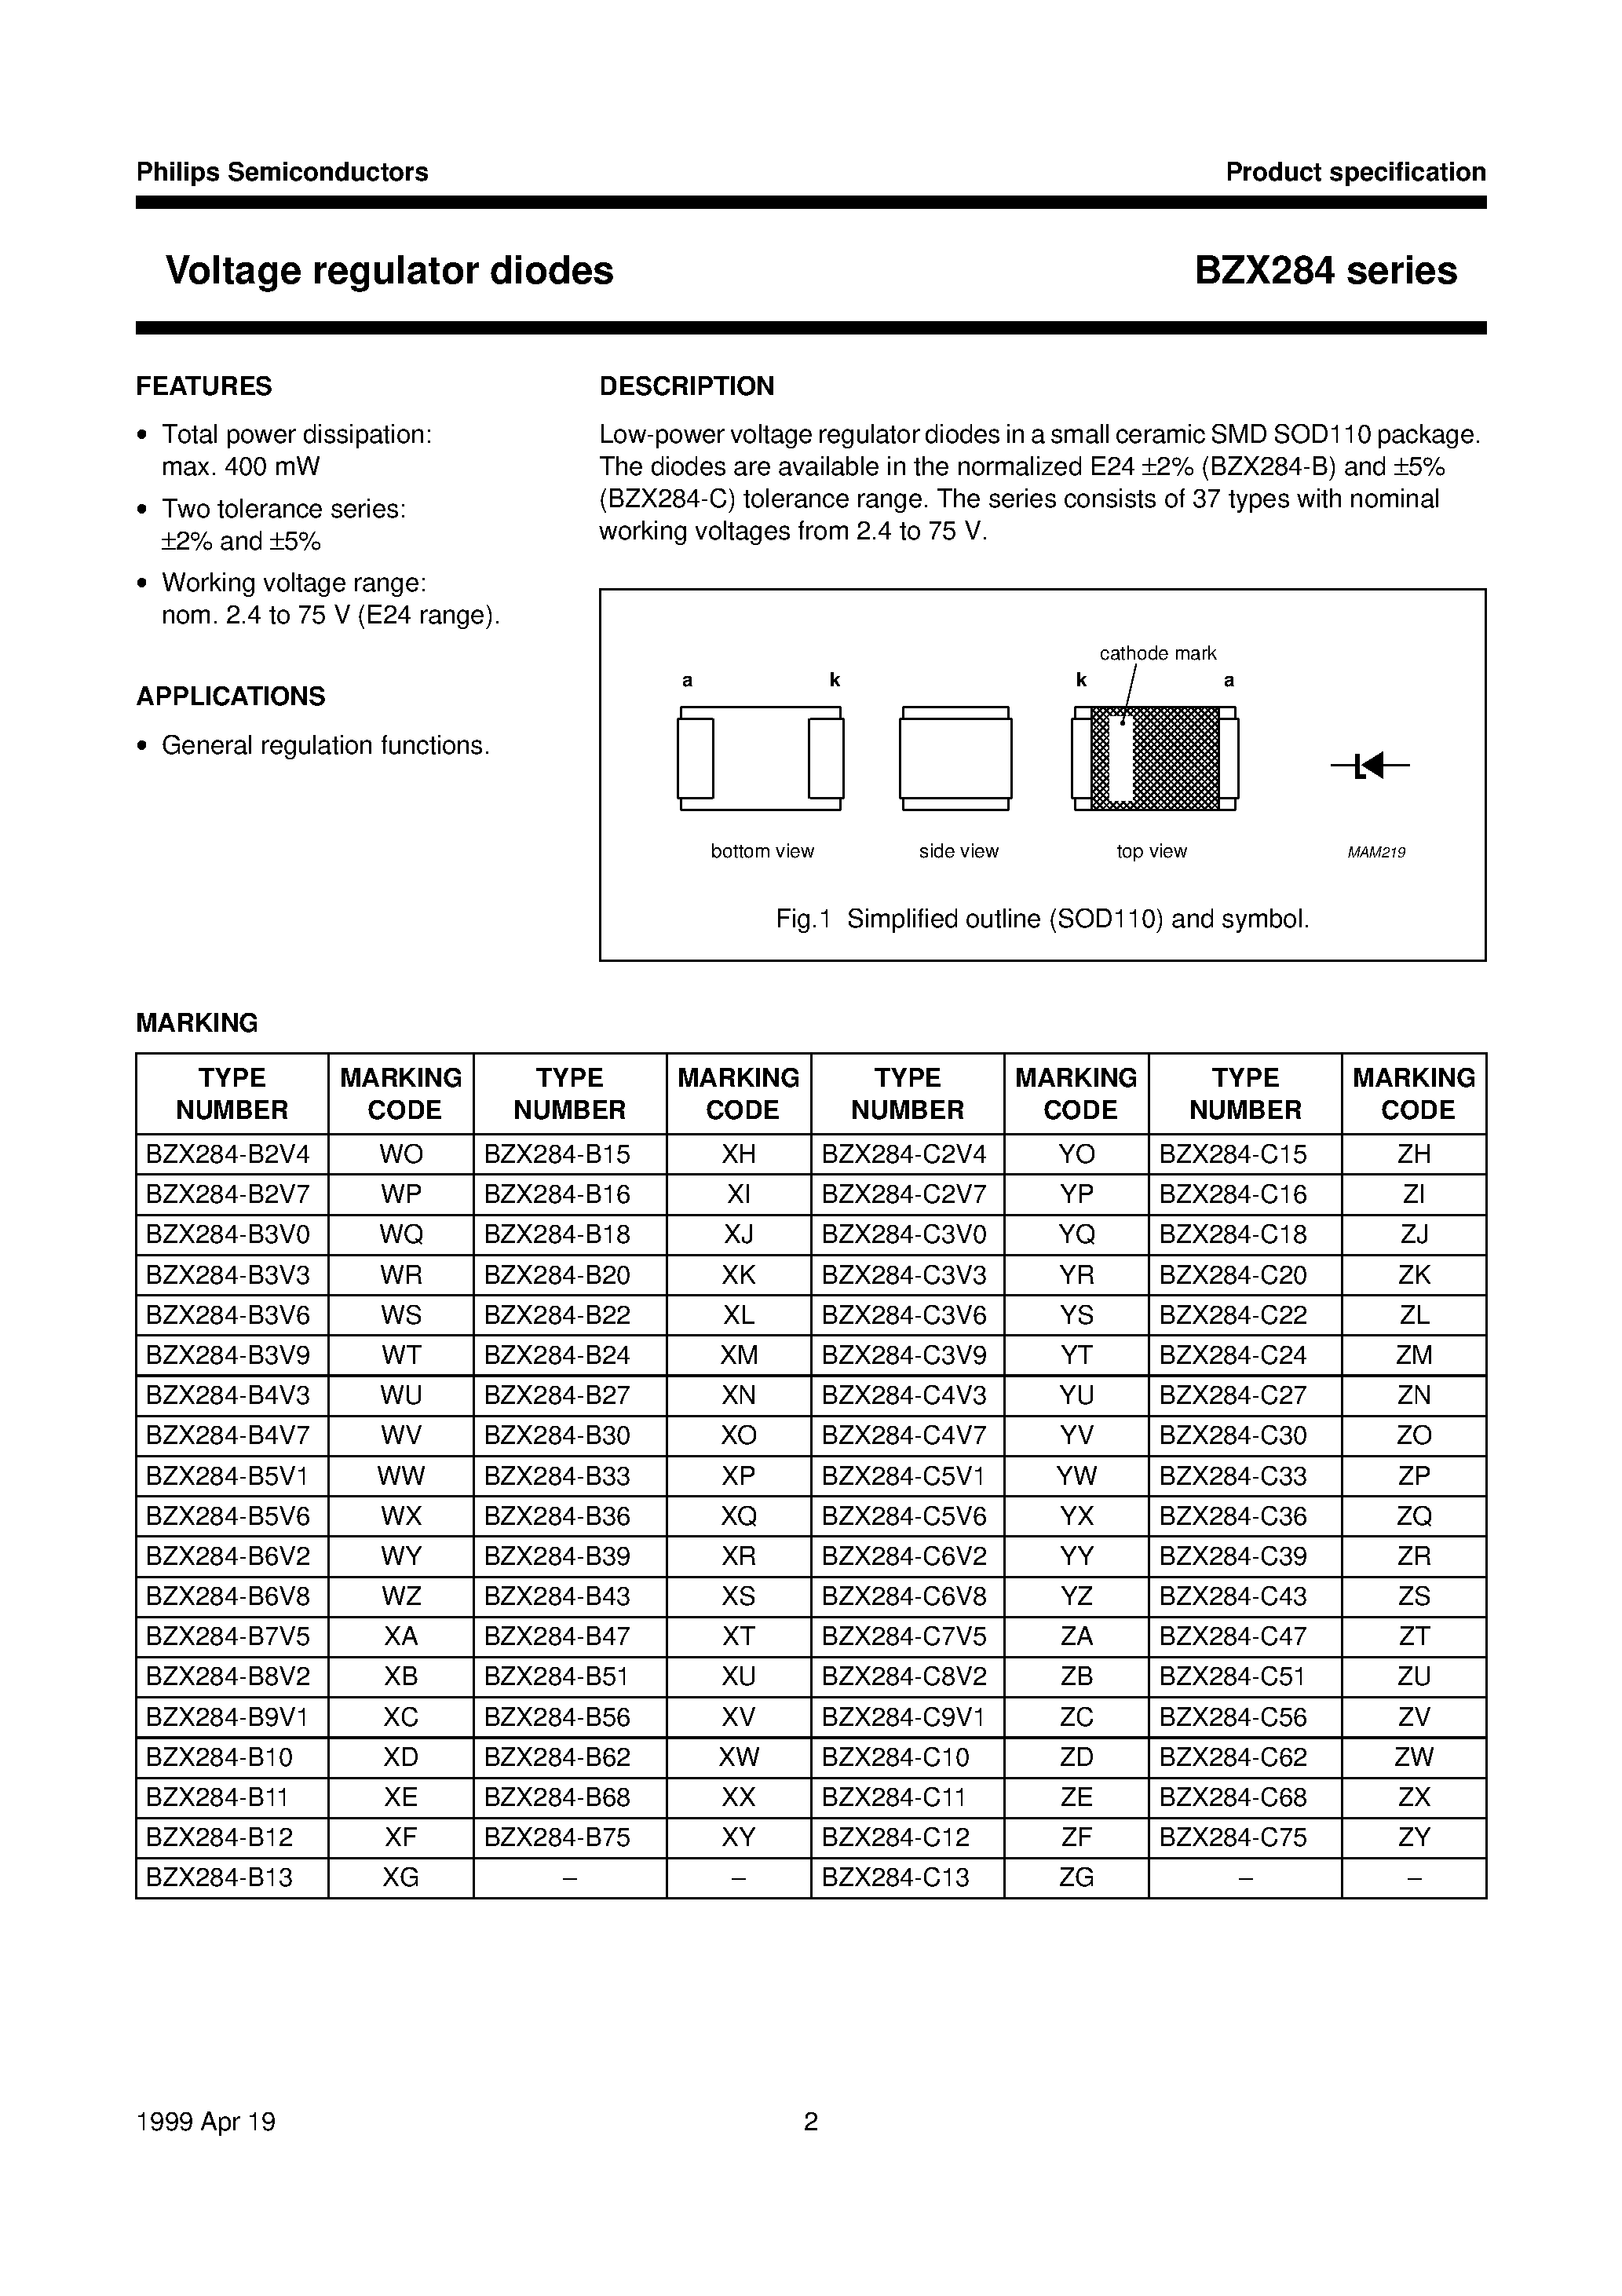 Datasheet BZX284-B2V4 - Voltage regulator diodes page 2